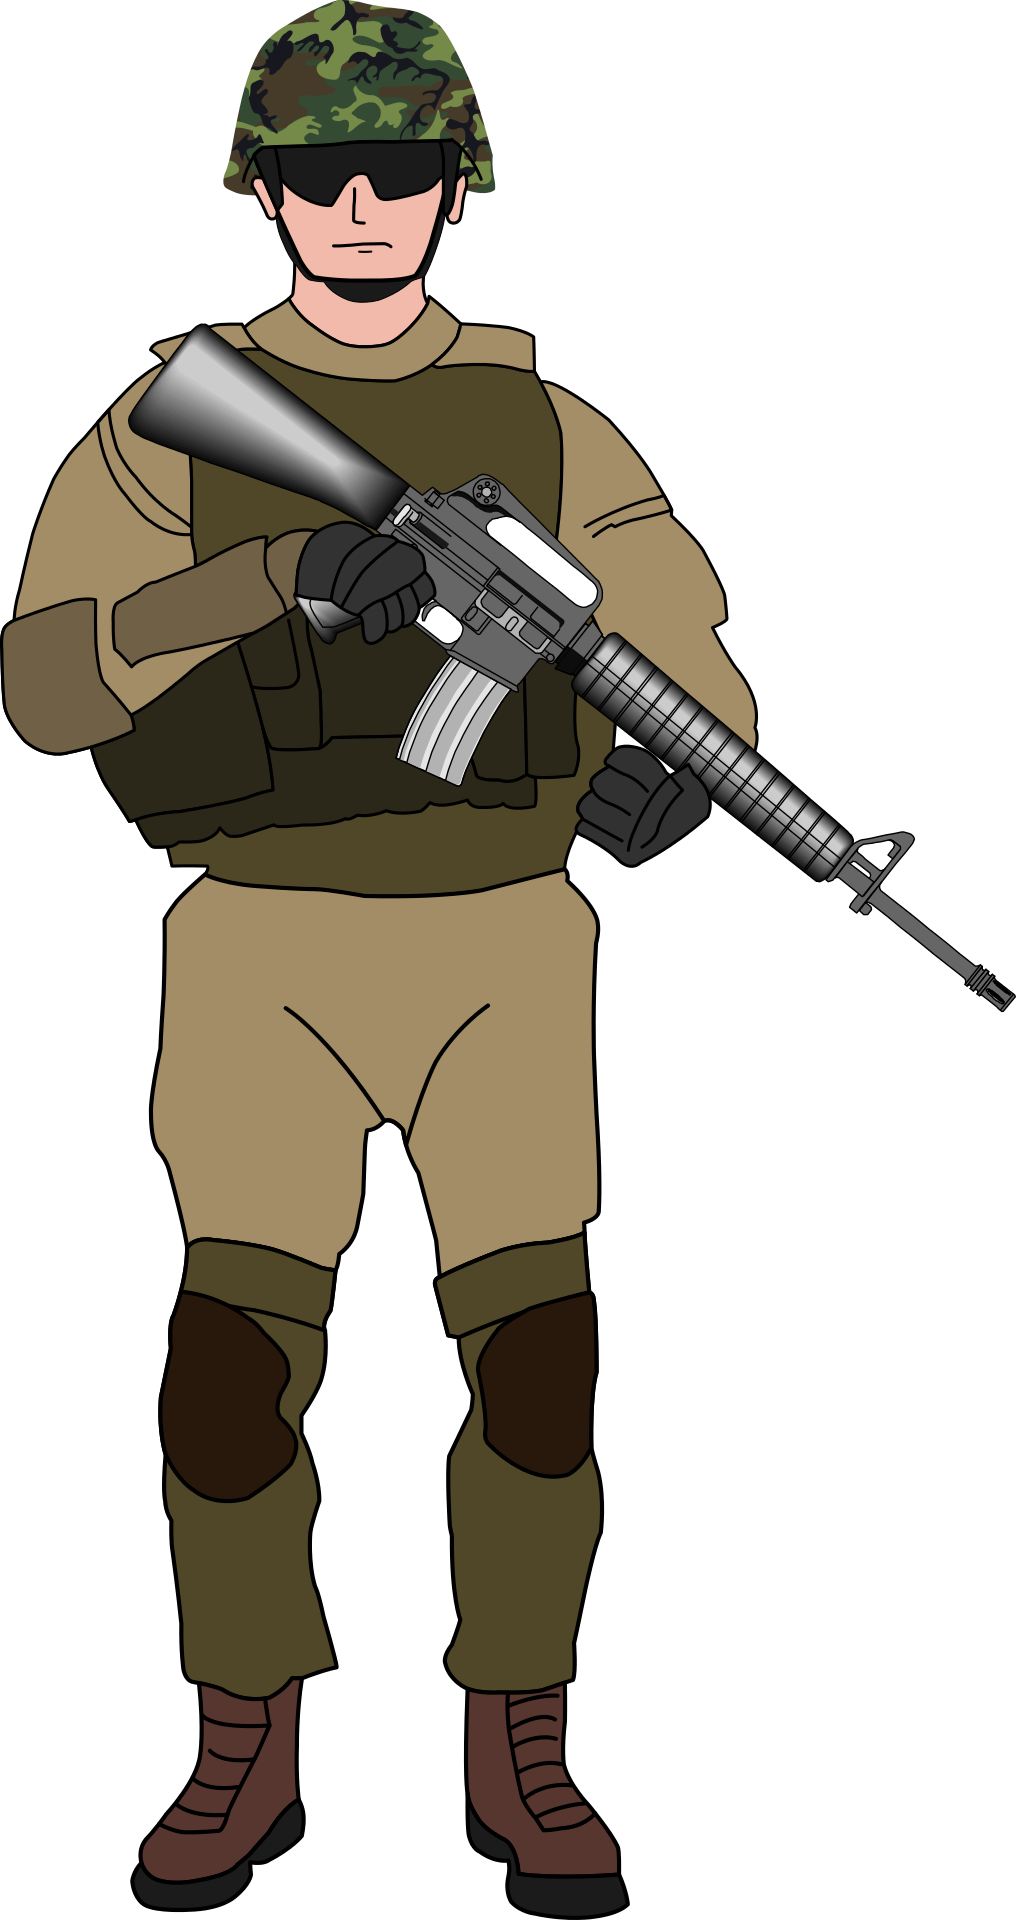 Army man drawing free image download